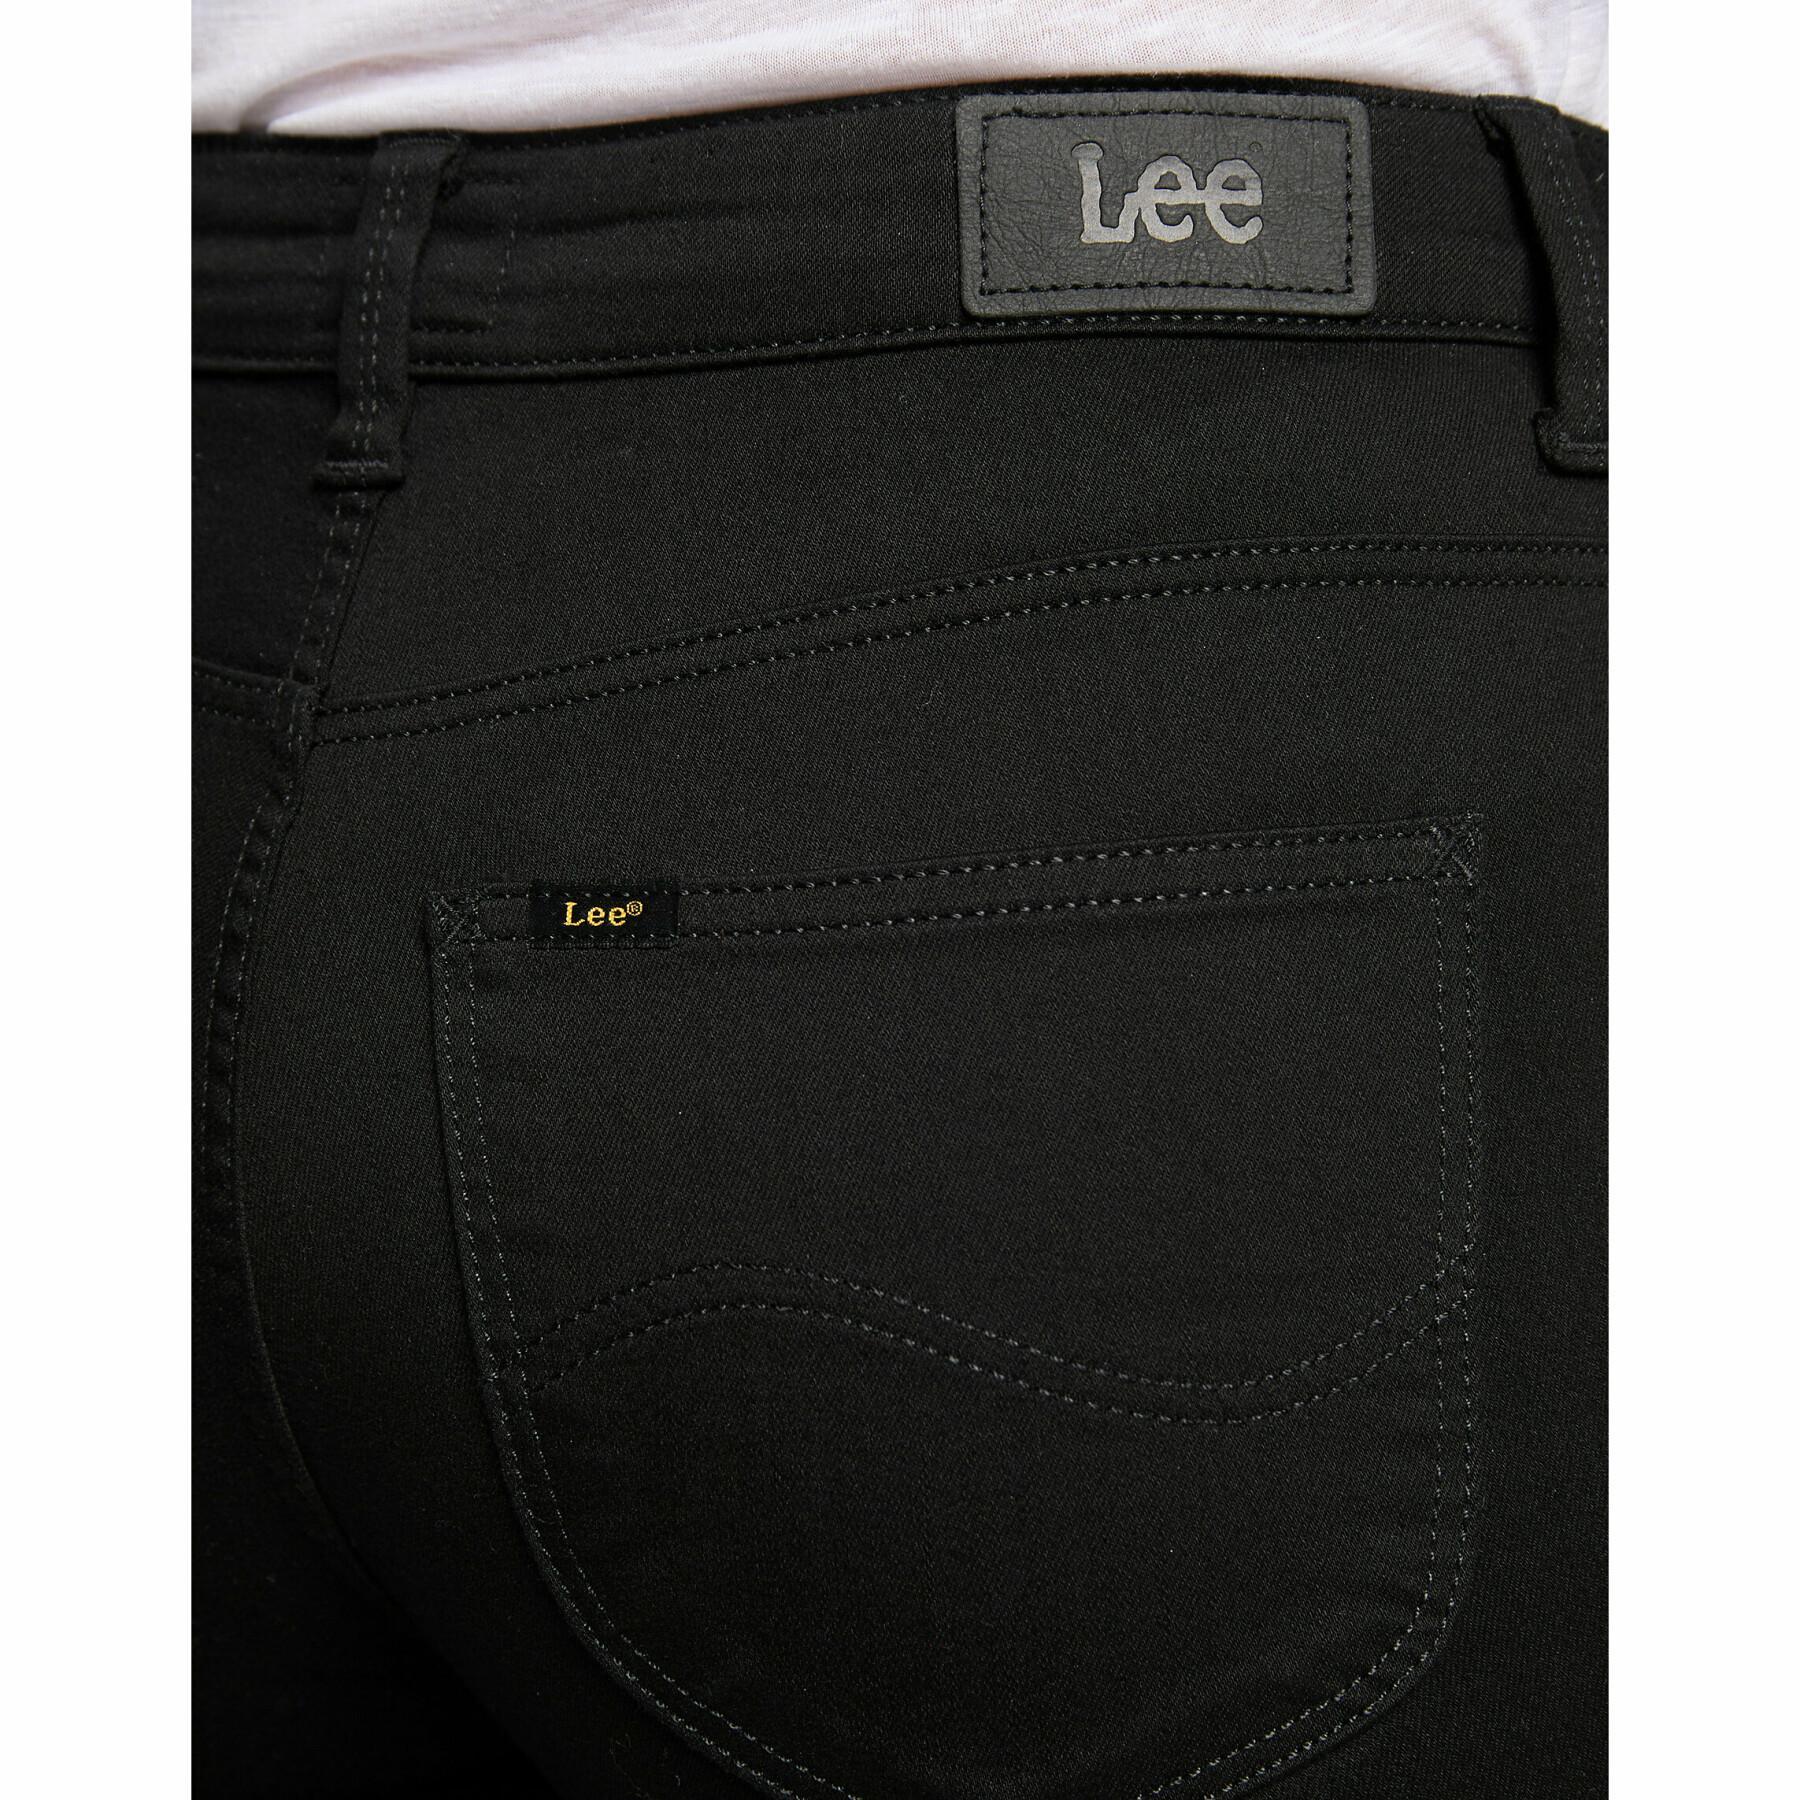 Women's jeans Lee Breese Boot in Black Rinse